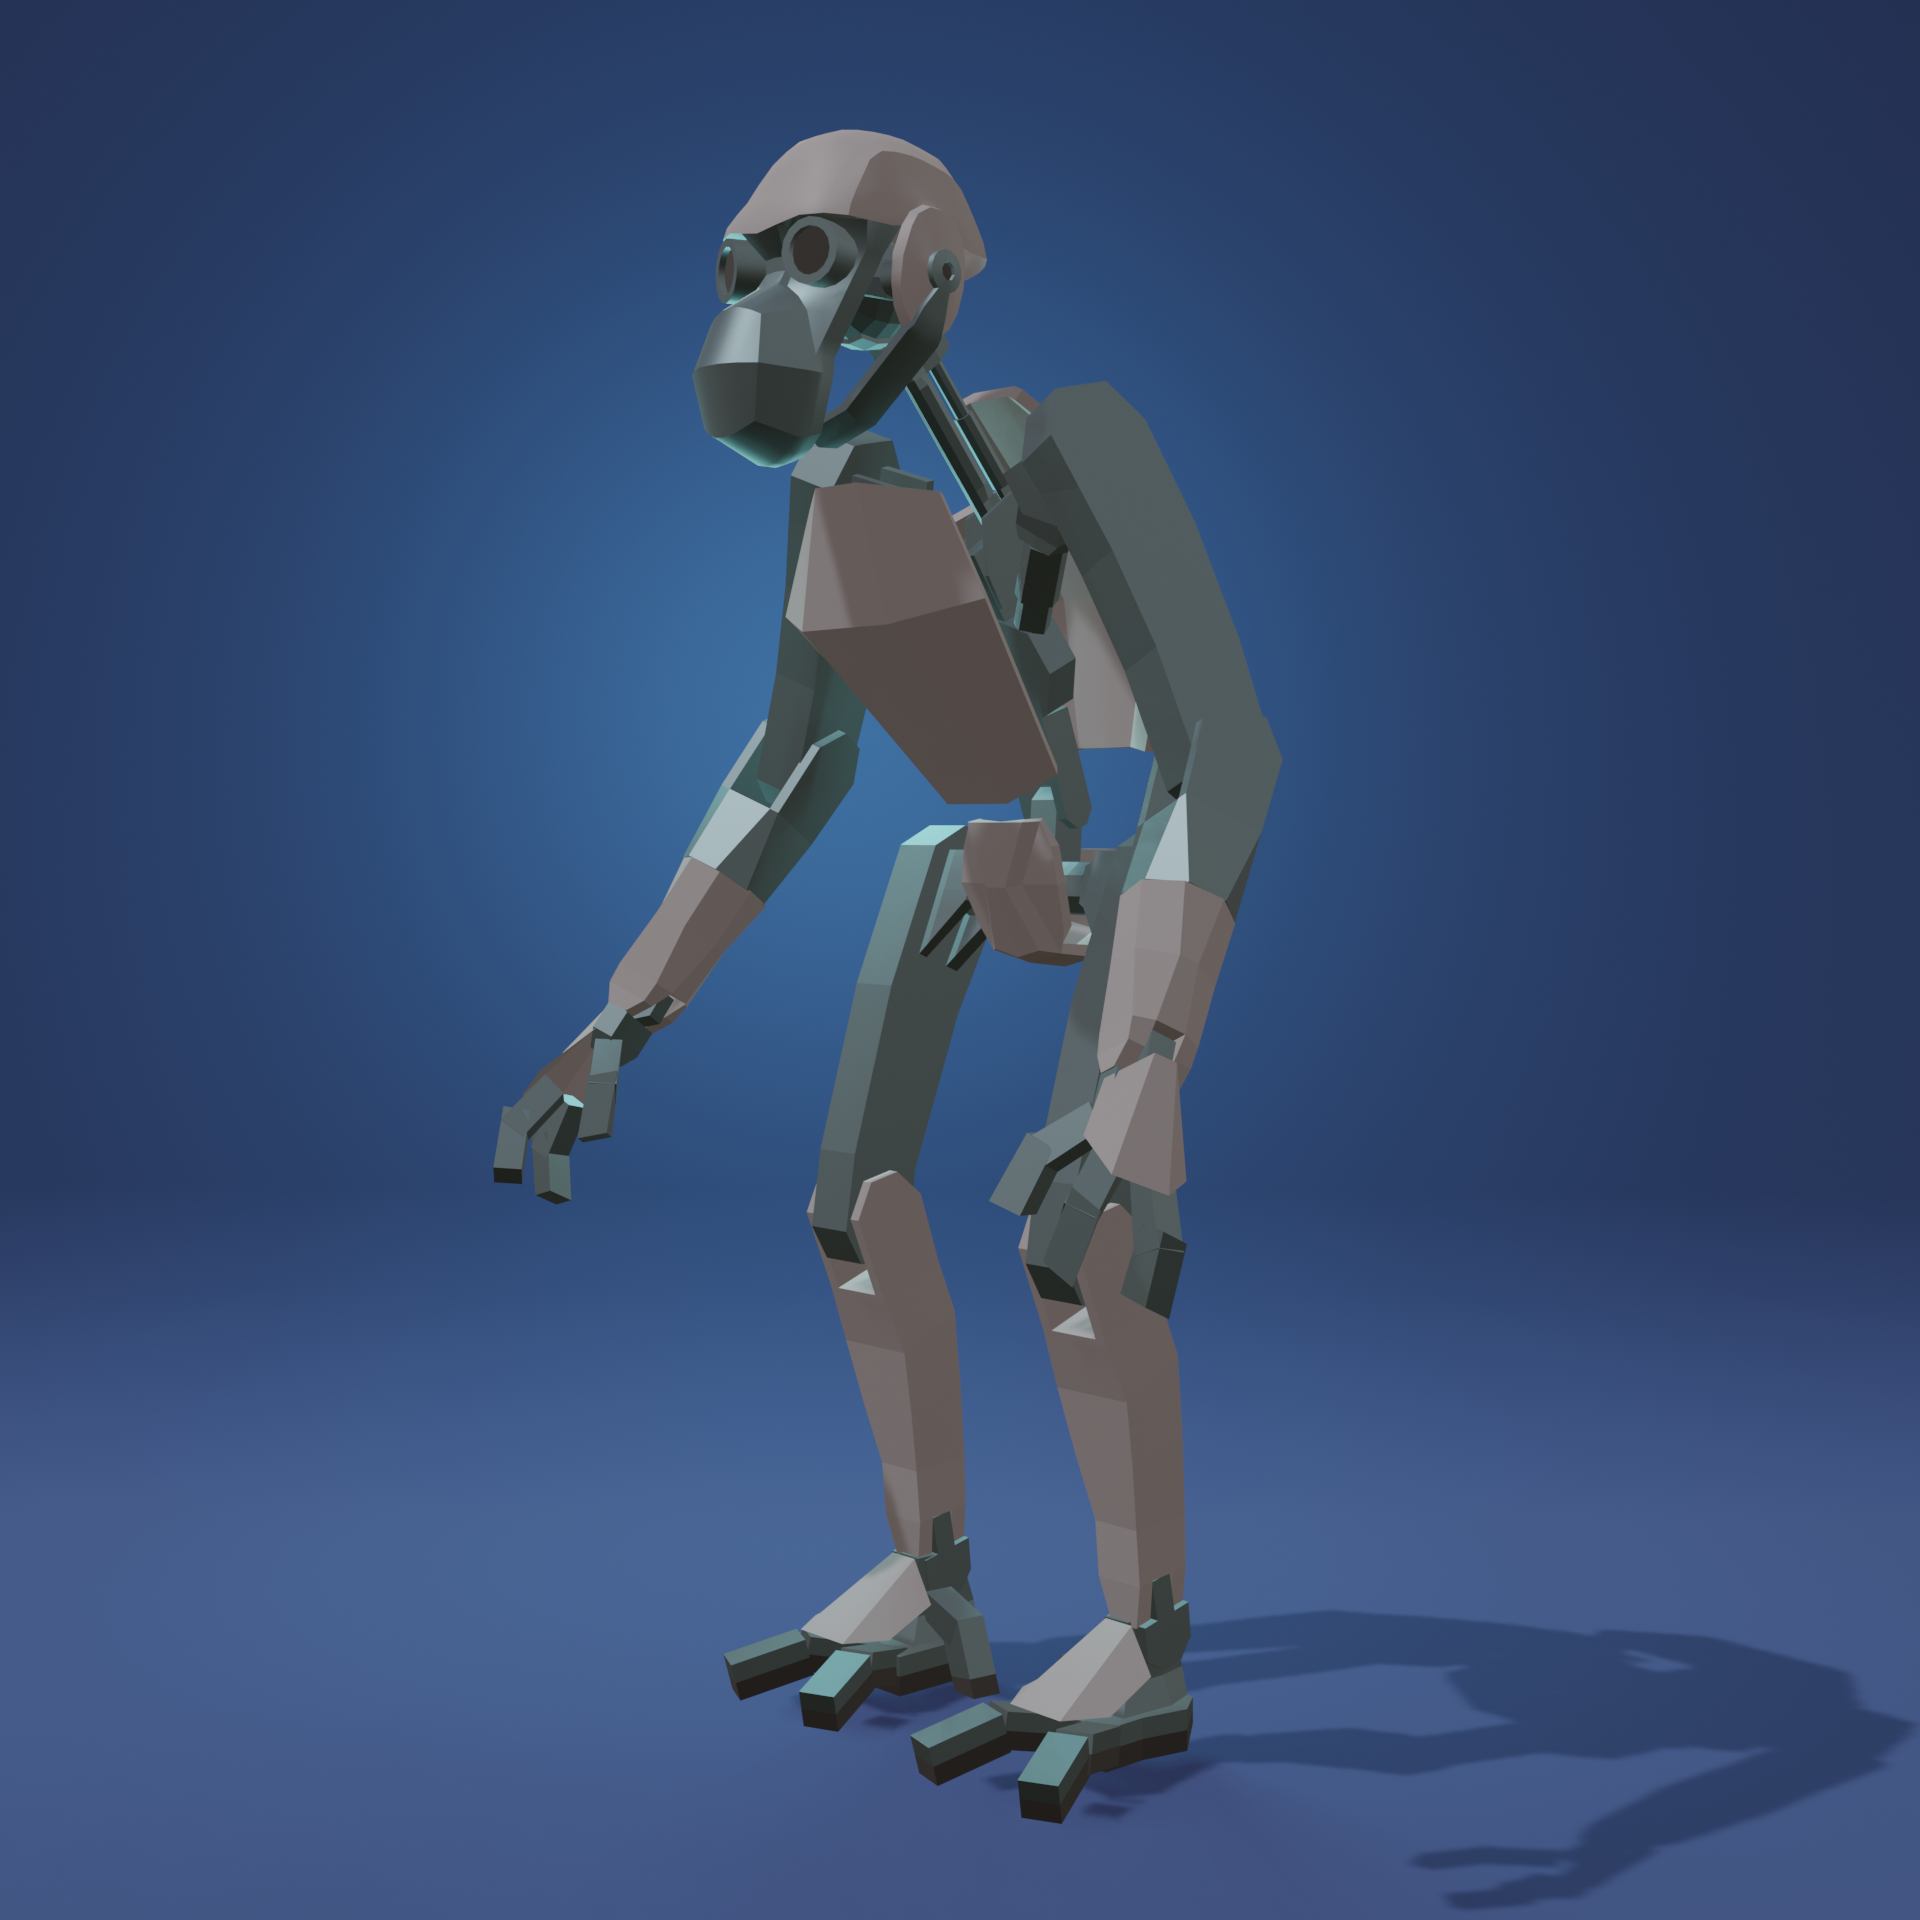 a 3D model of a robot that resembles a chimpanzee